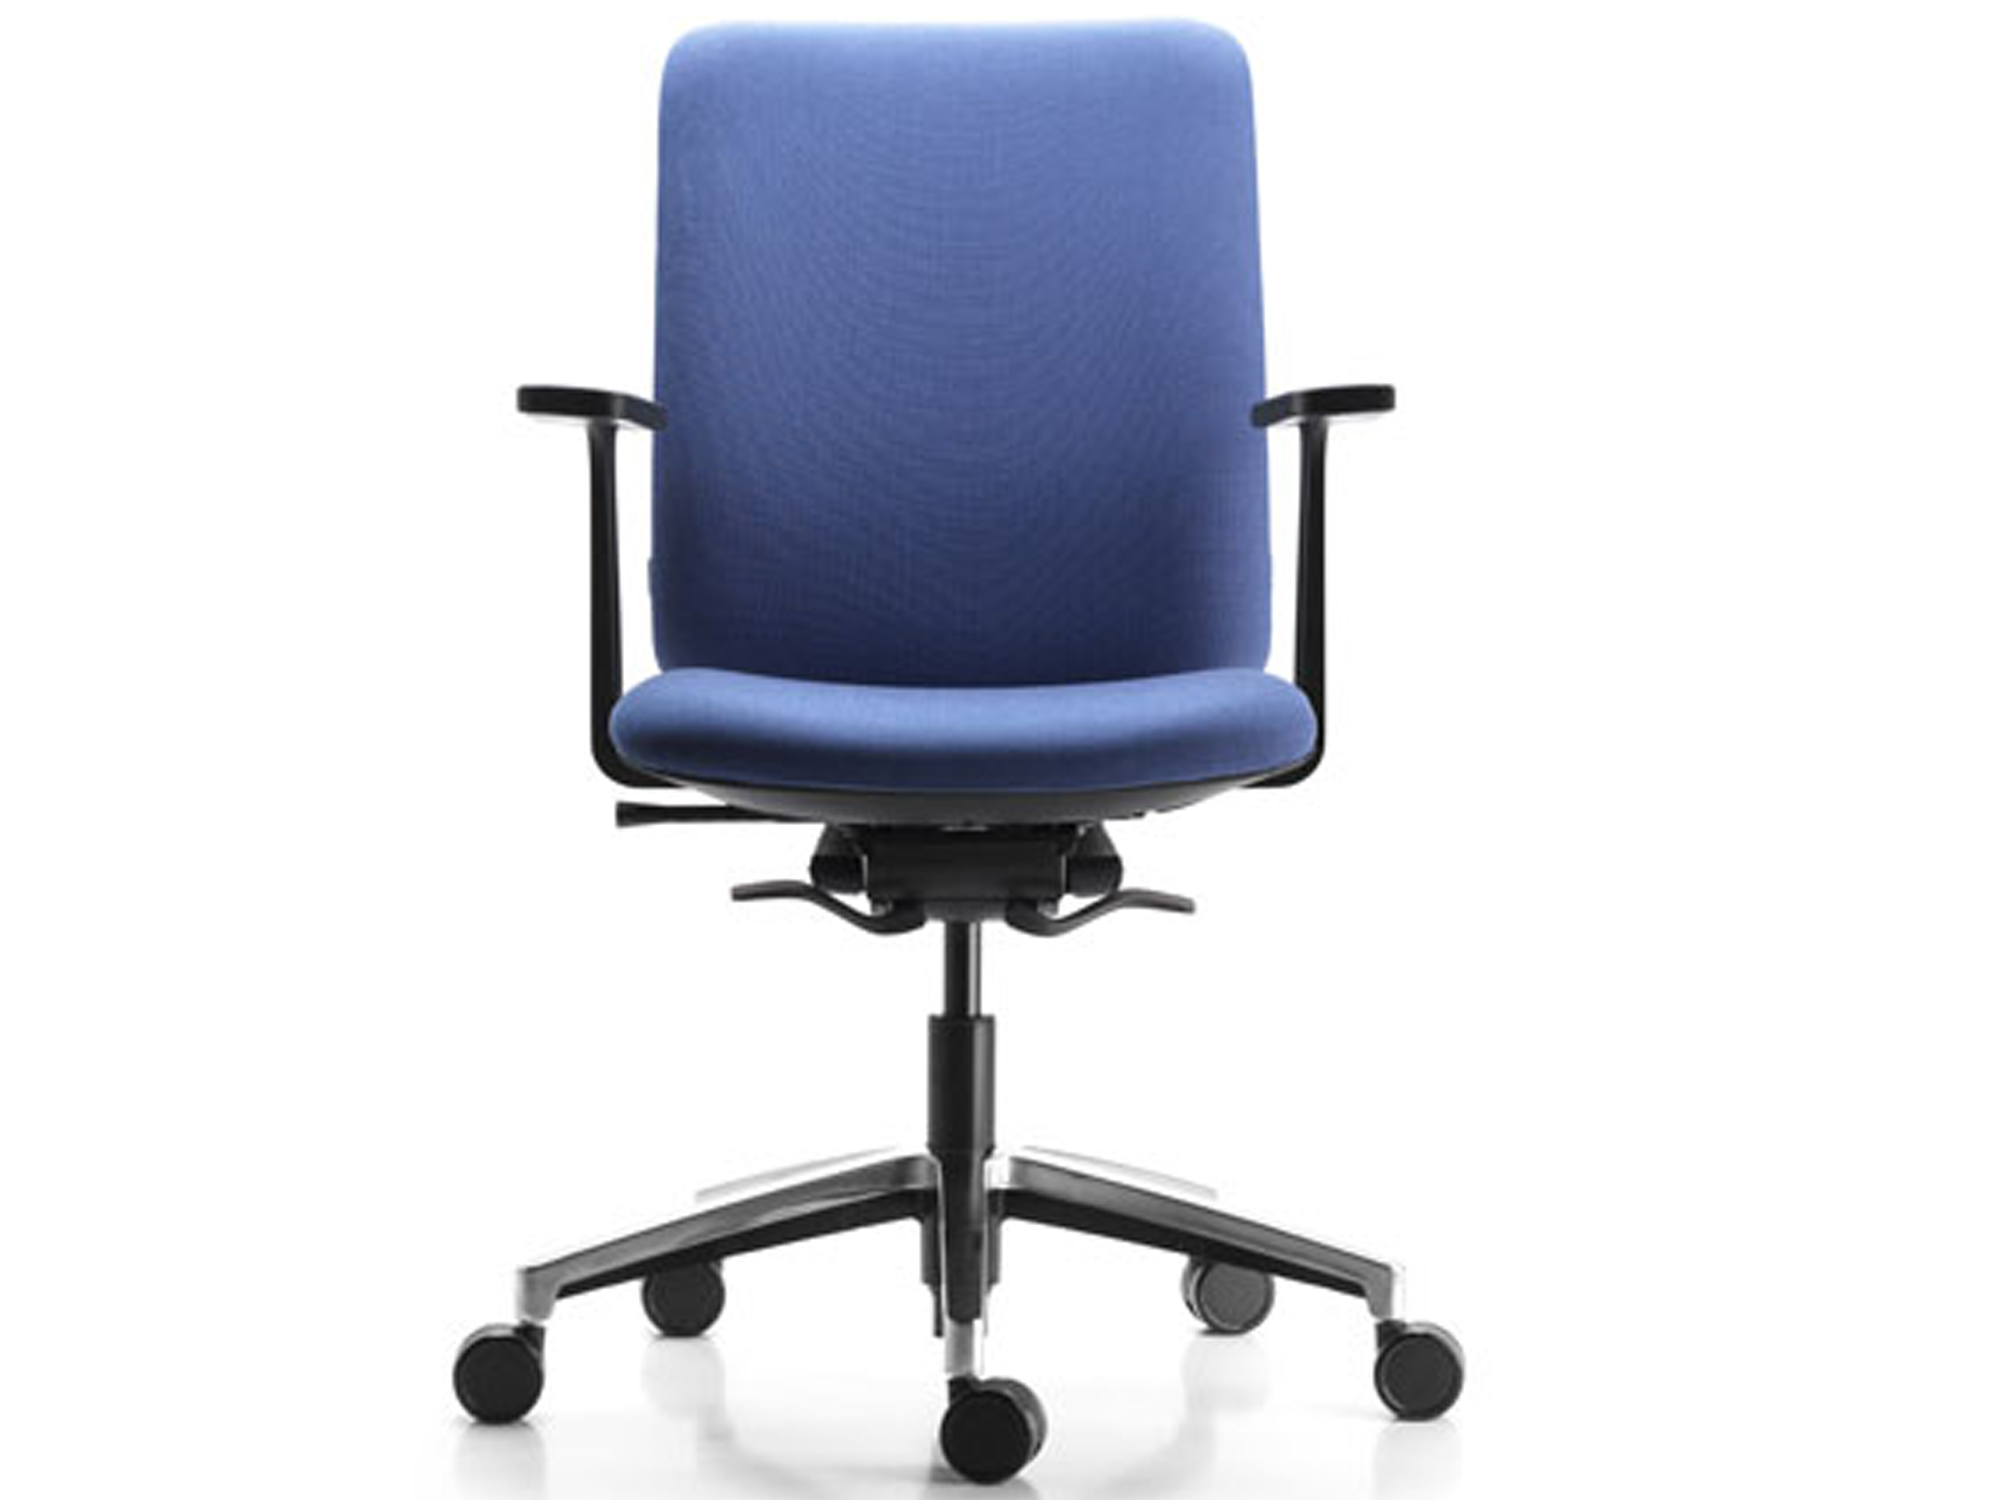 Chair-design-13.jpg